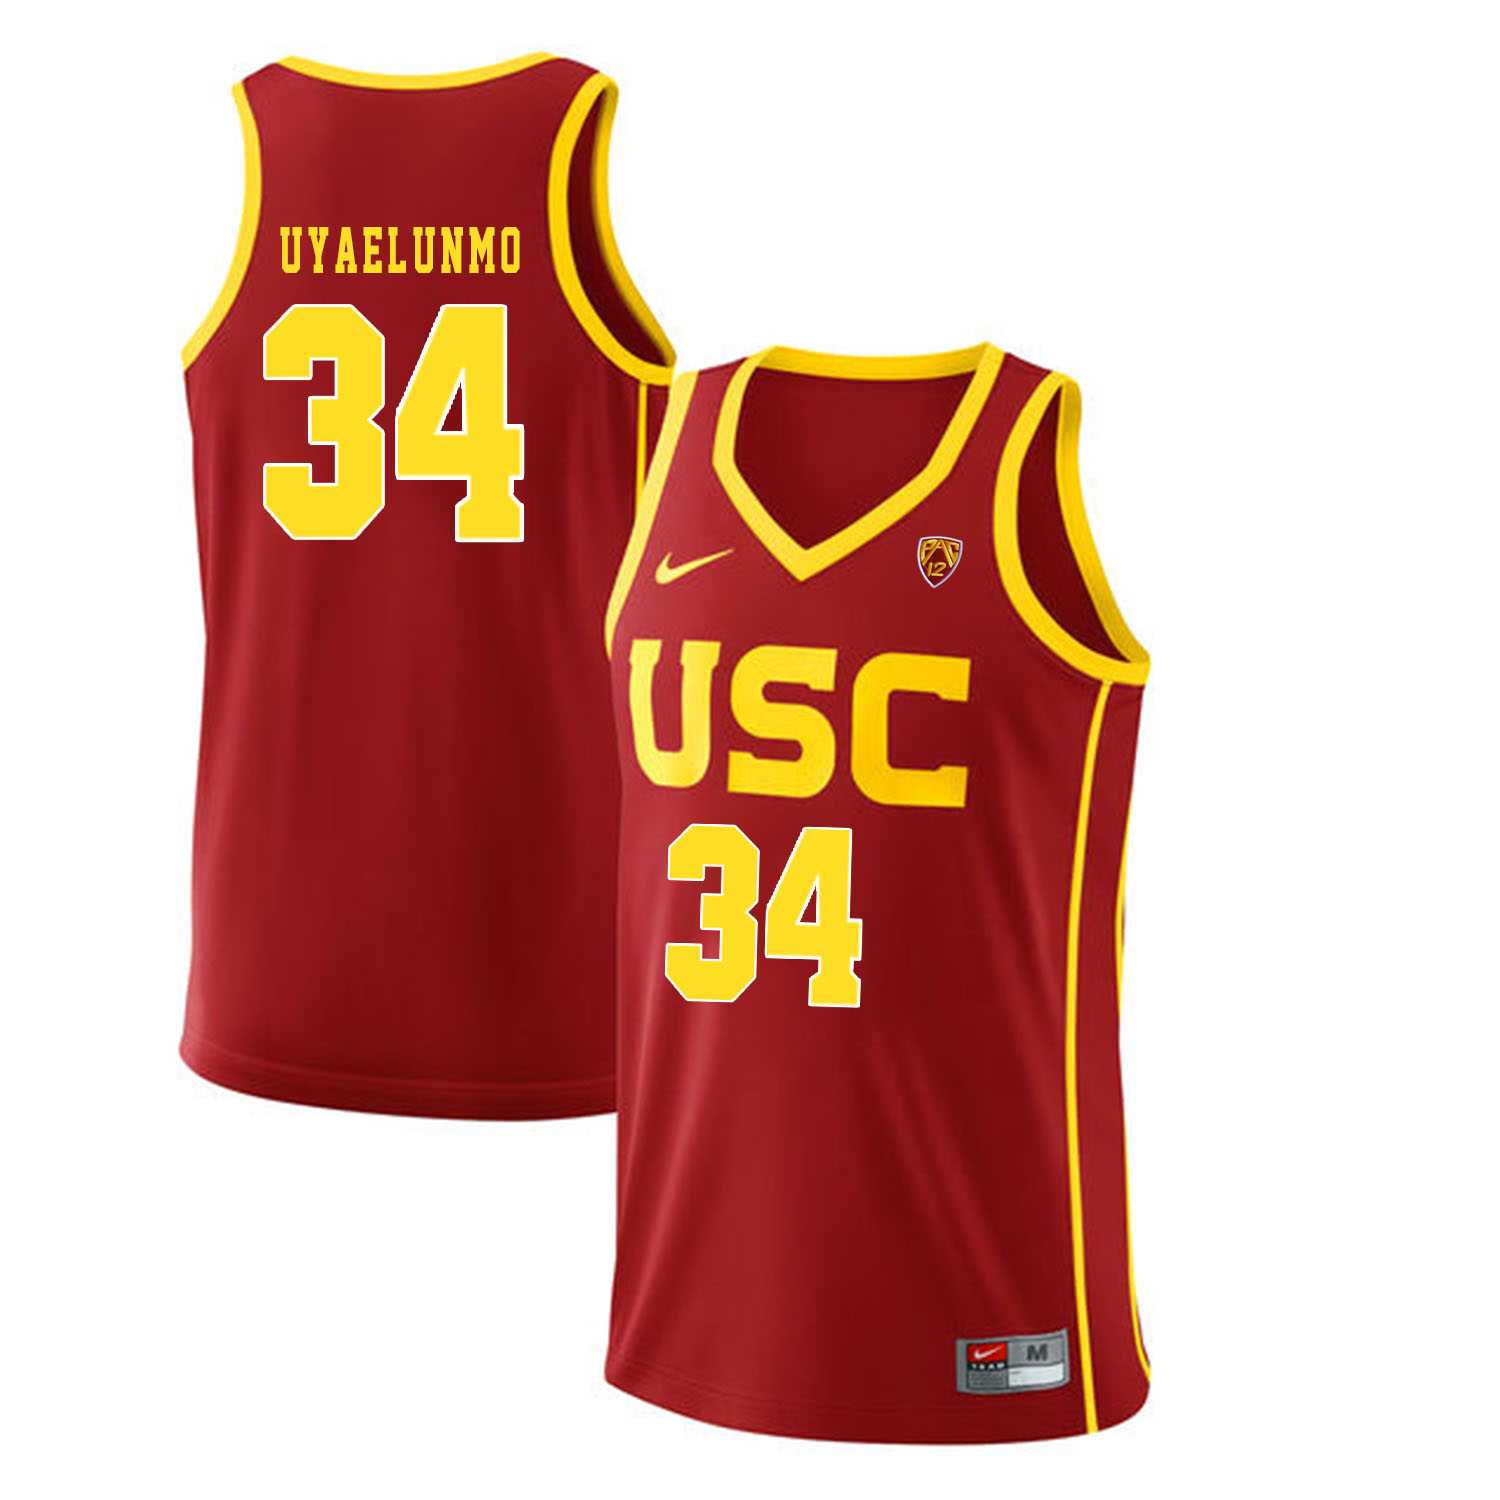 USC Trojans #34 Victor Uyaelunmo Red College Basketball Jersey